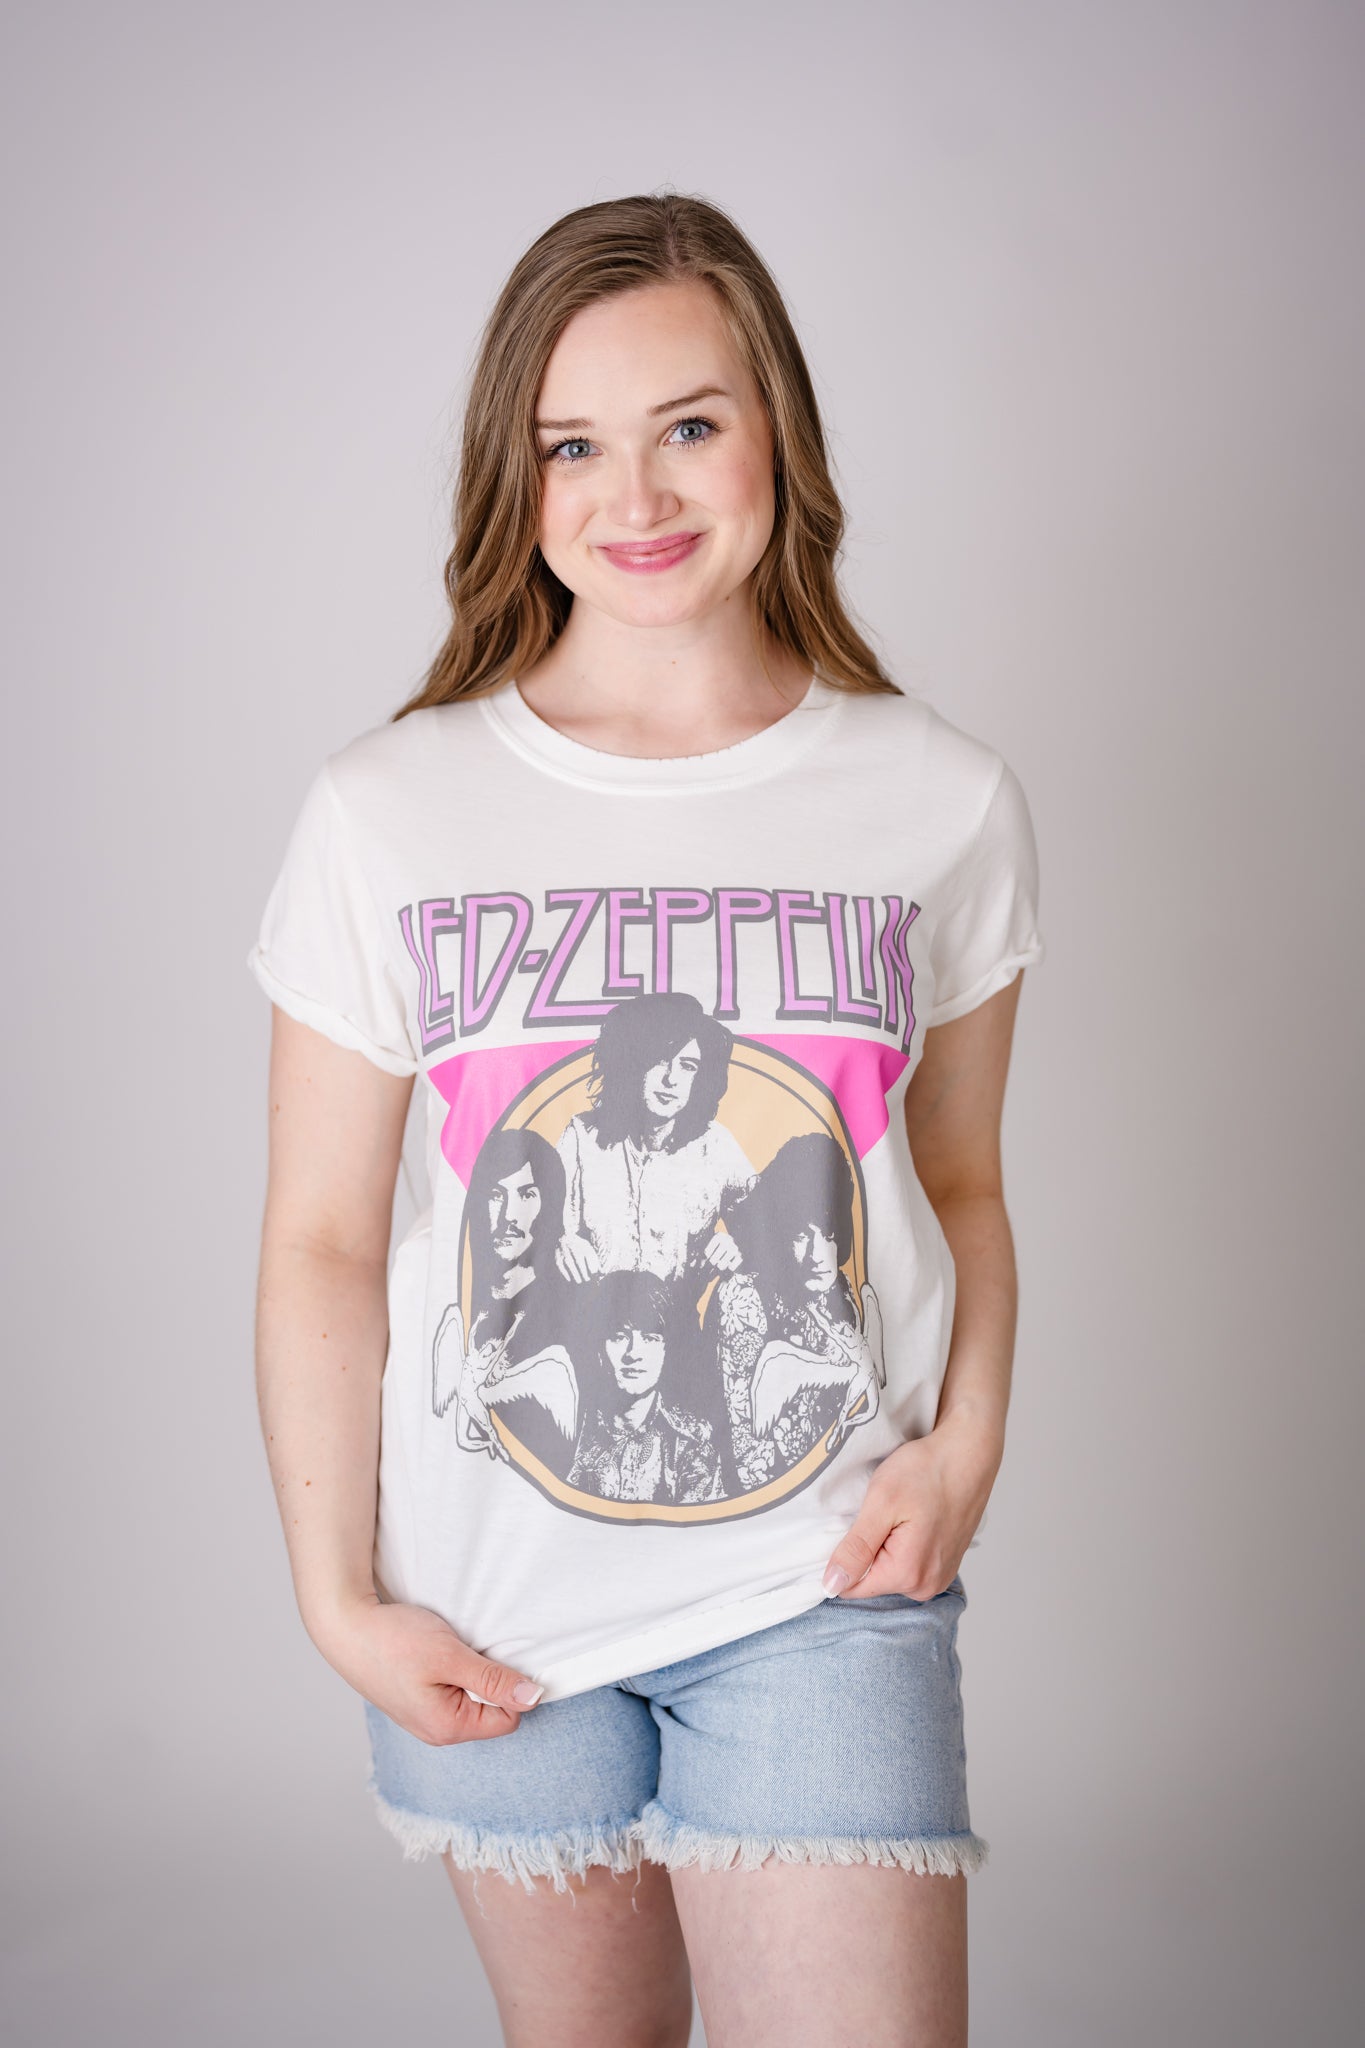 Led Zeppelin Band Tee